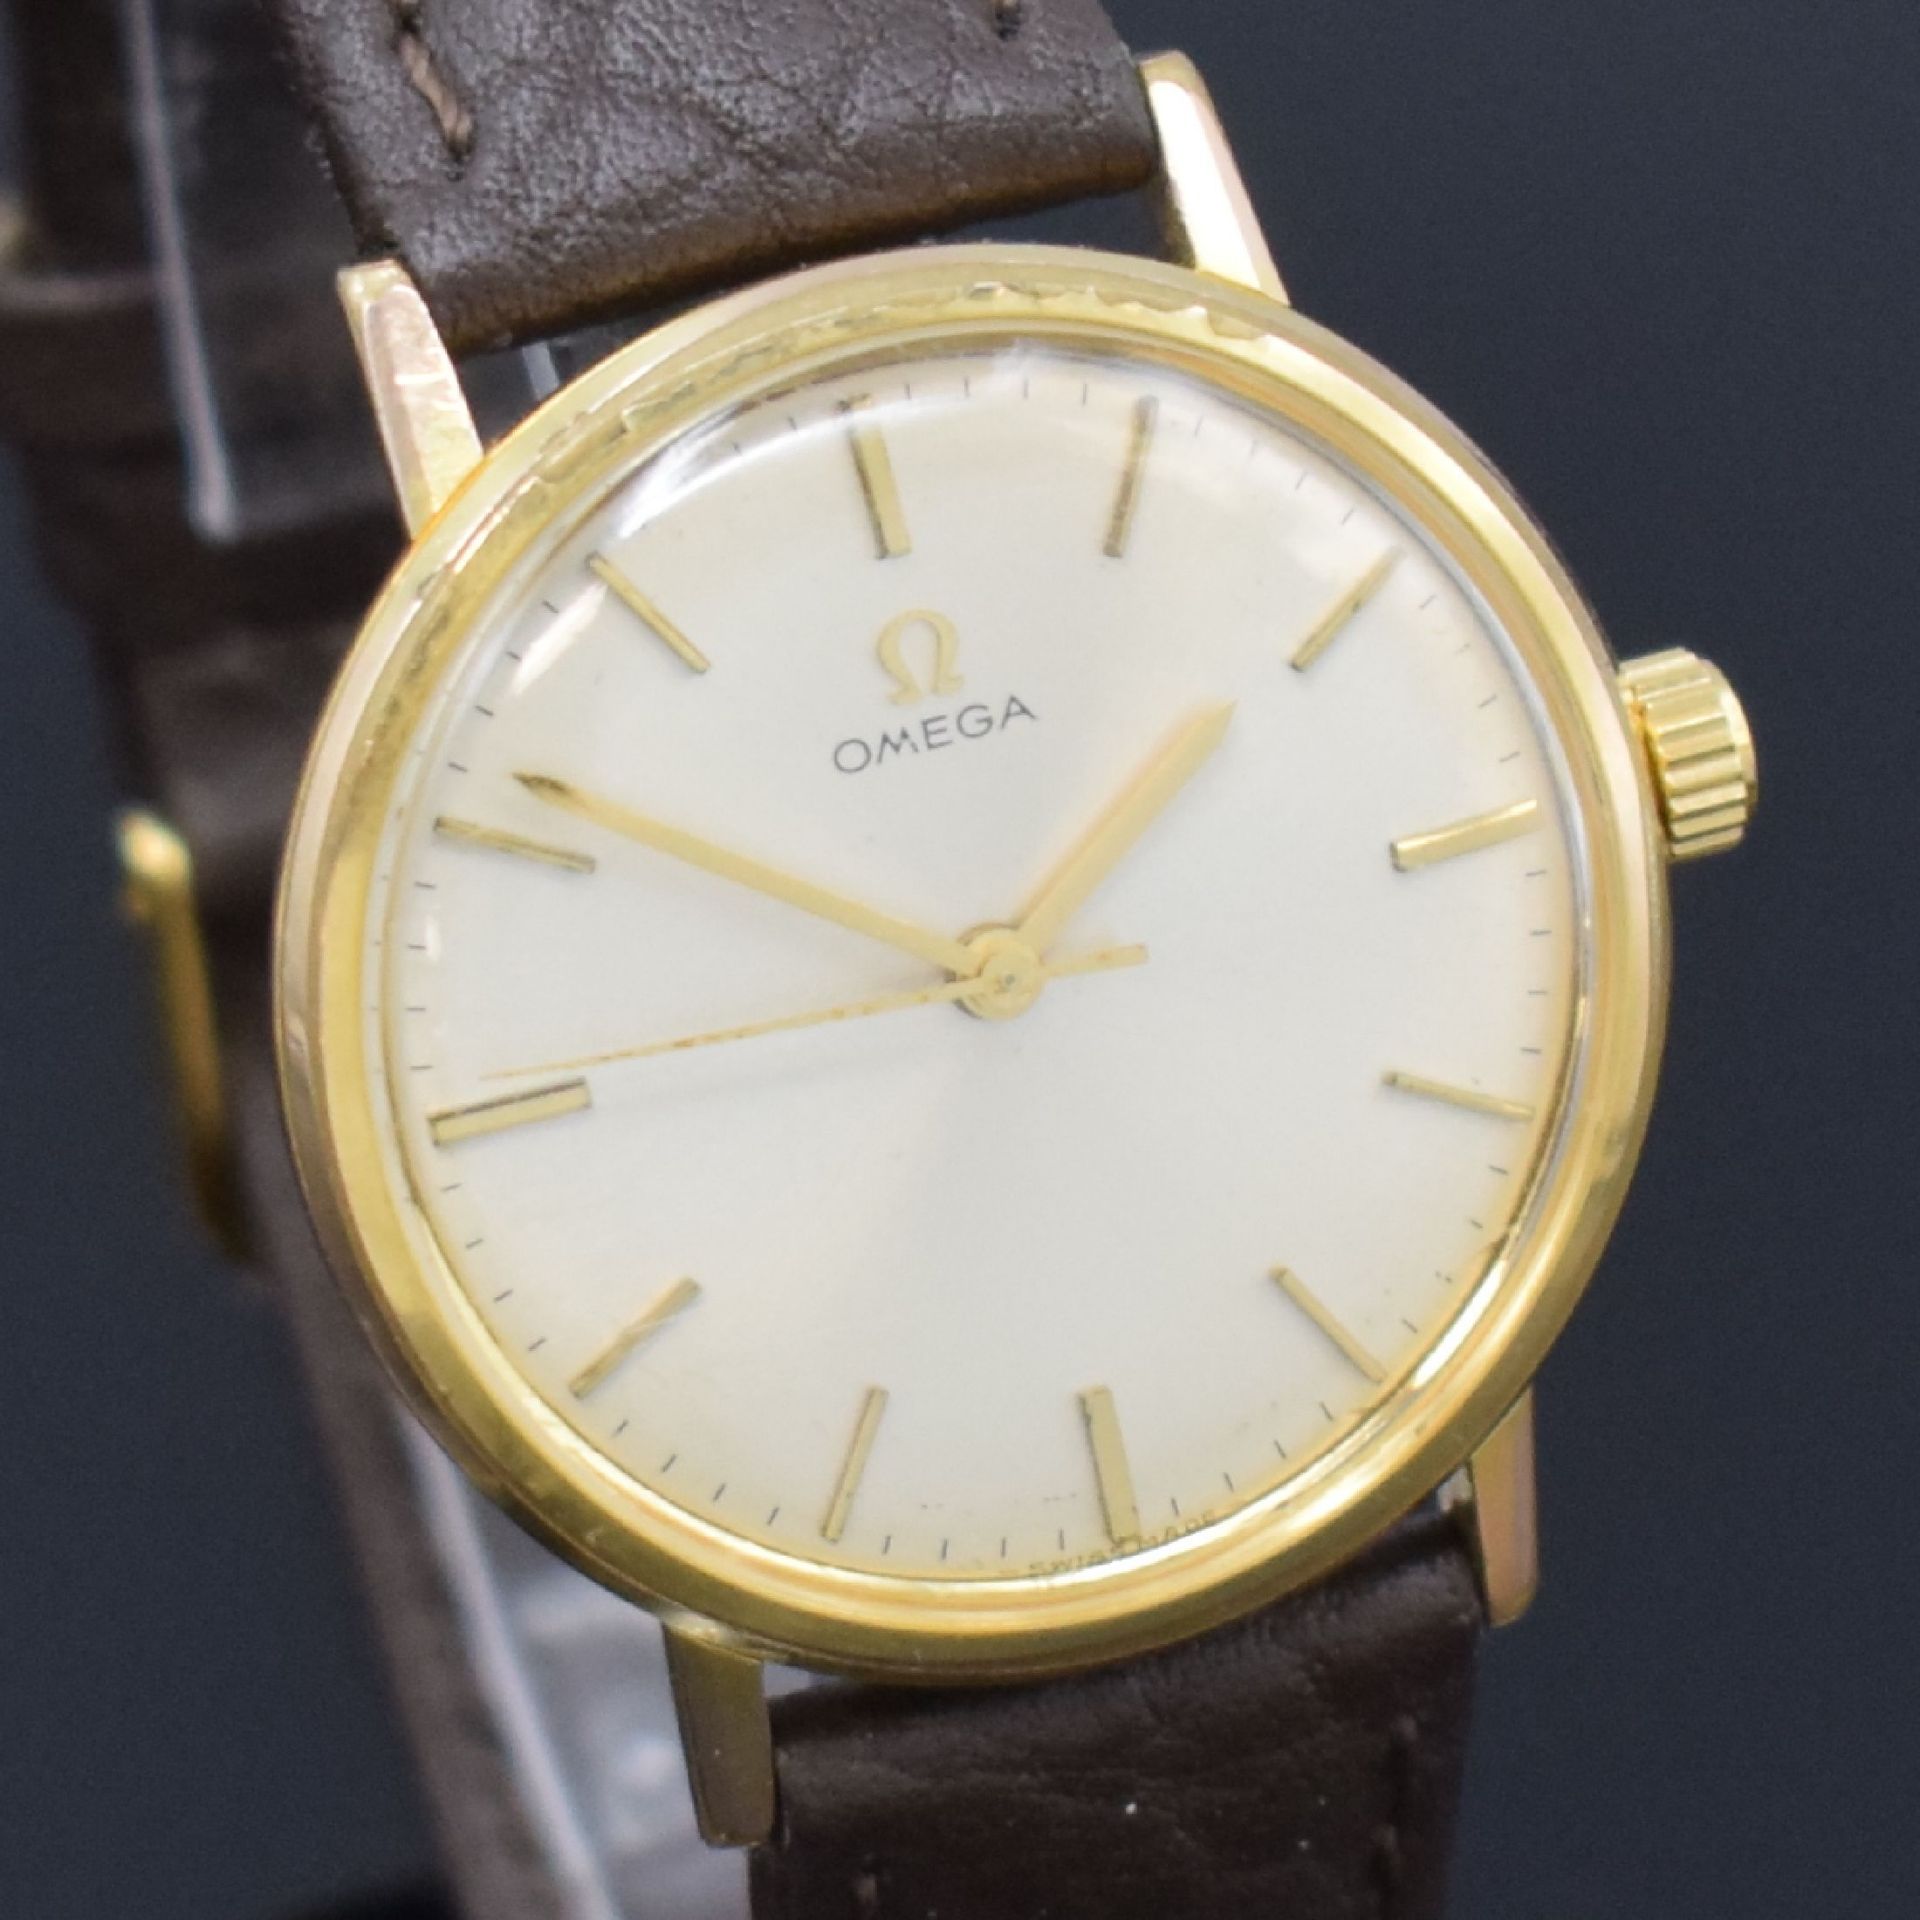 OMEGA vergoldete Armbanduhr, Schweiz um 1965, Handaufzug, - Image 4 of 6